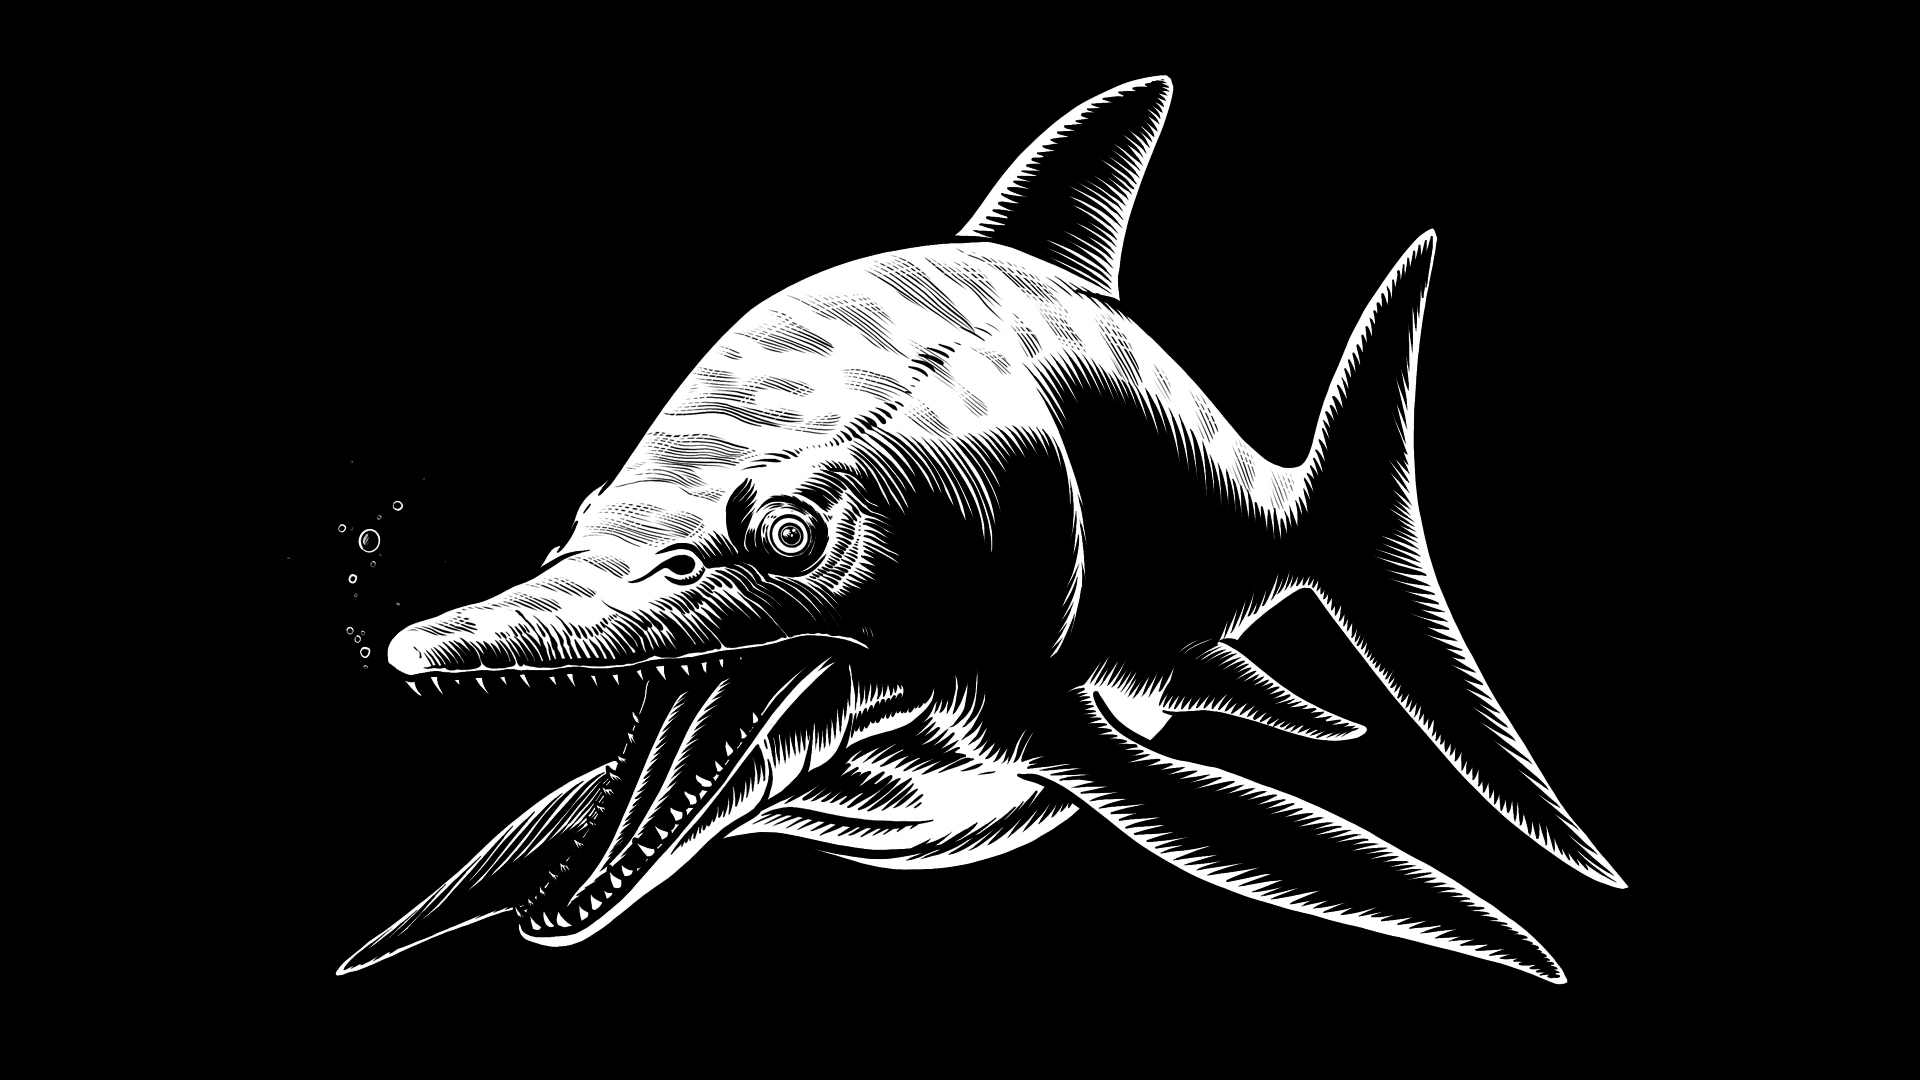 2D Black and White Dinosaur Dolphin Illustration